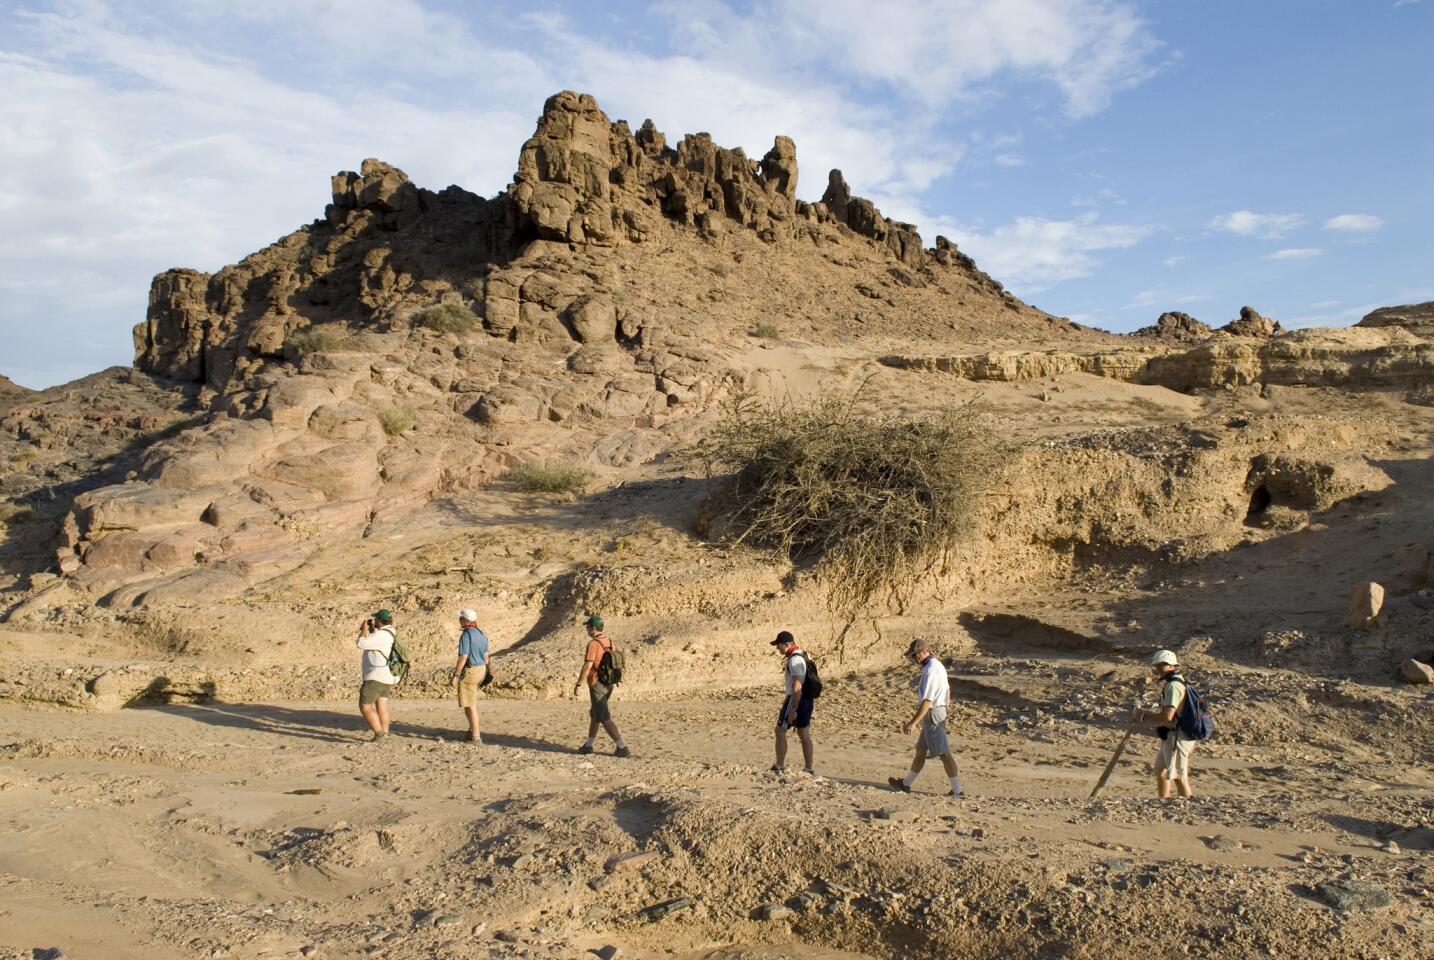 Tourists on a guided hike by Hoanib River, near Hoanib Camp in Kaokoland, Namibia.